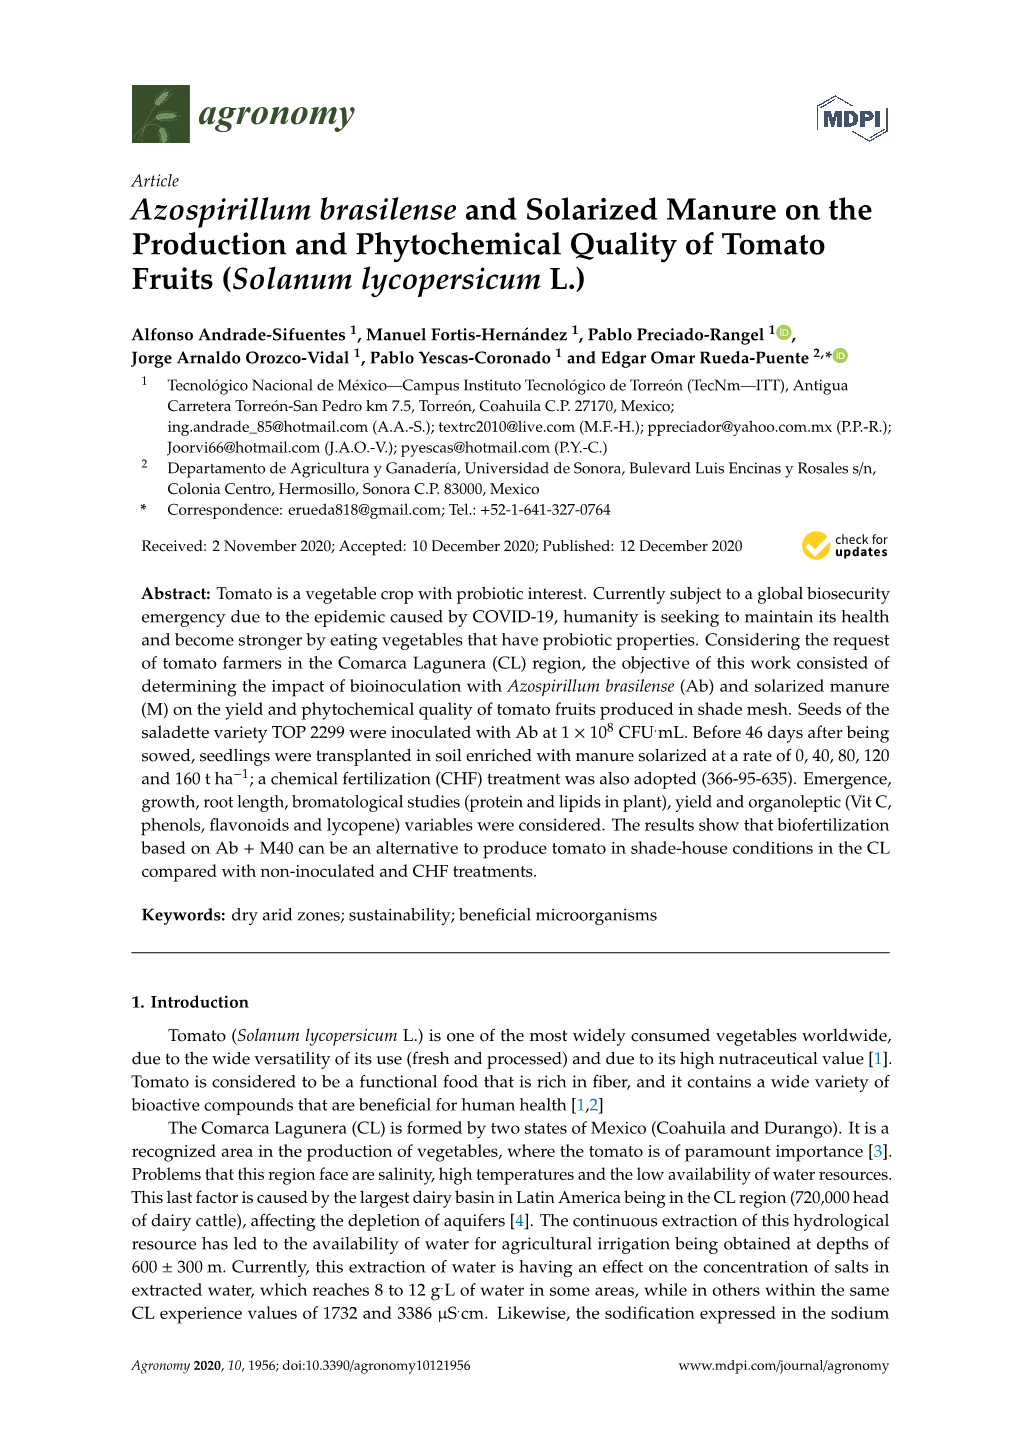 Azospirillum Brasilense and Solarized Manure on the Production and Phytochemical Quality of Tomato Fruits (Solanum Lycopersicum L.)